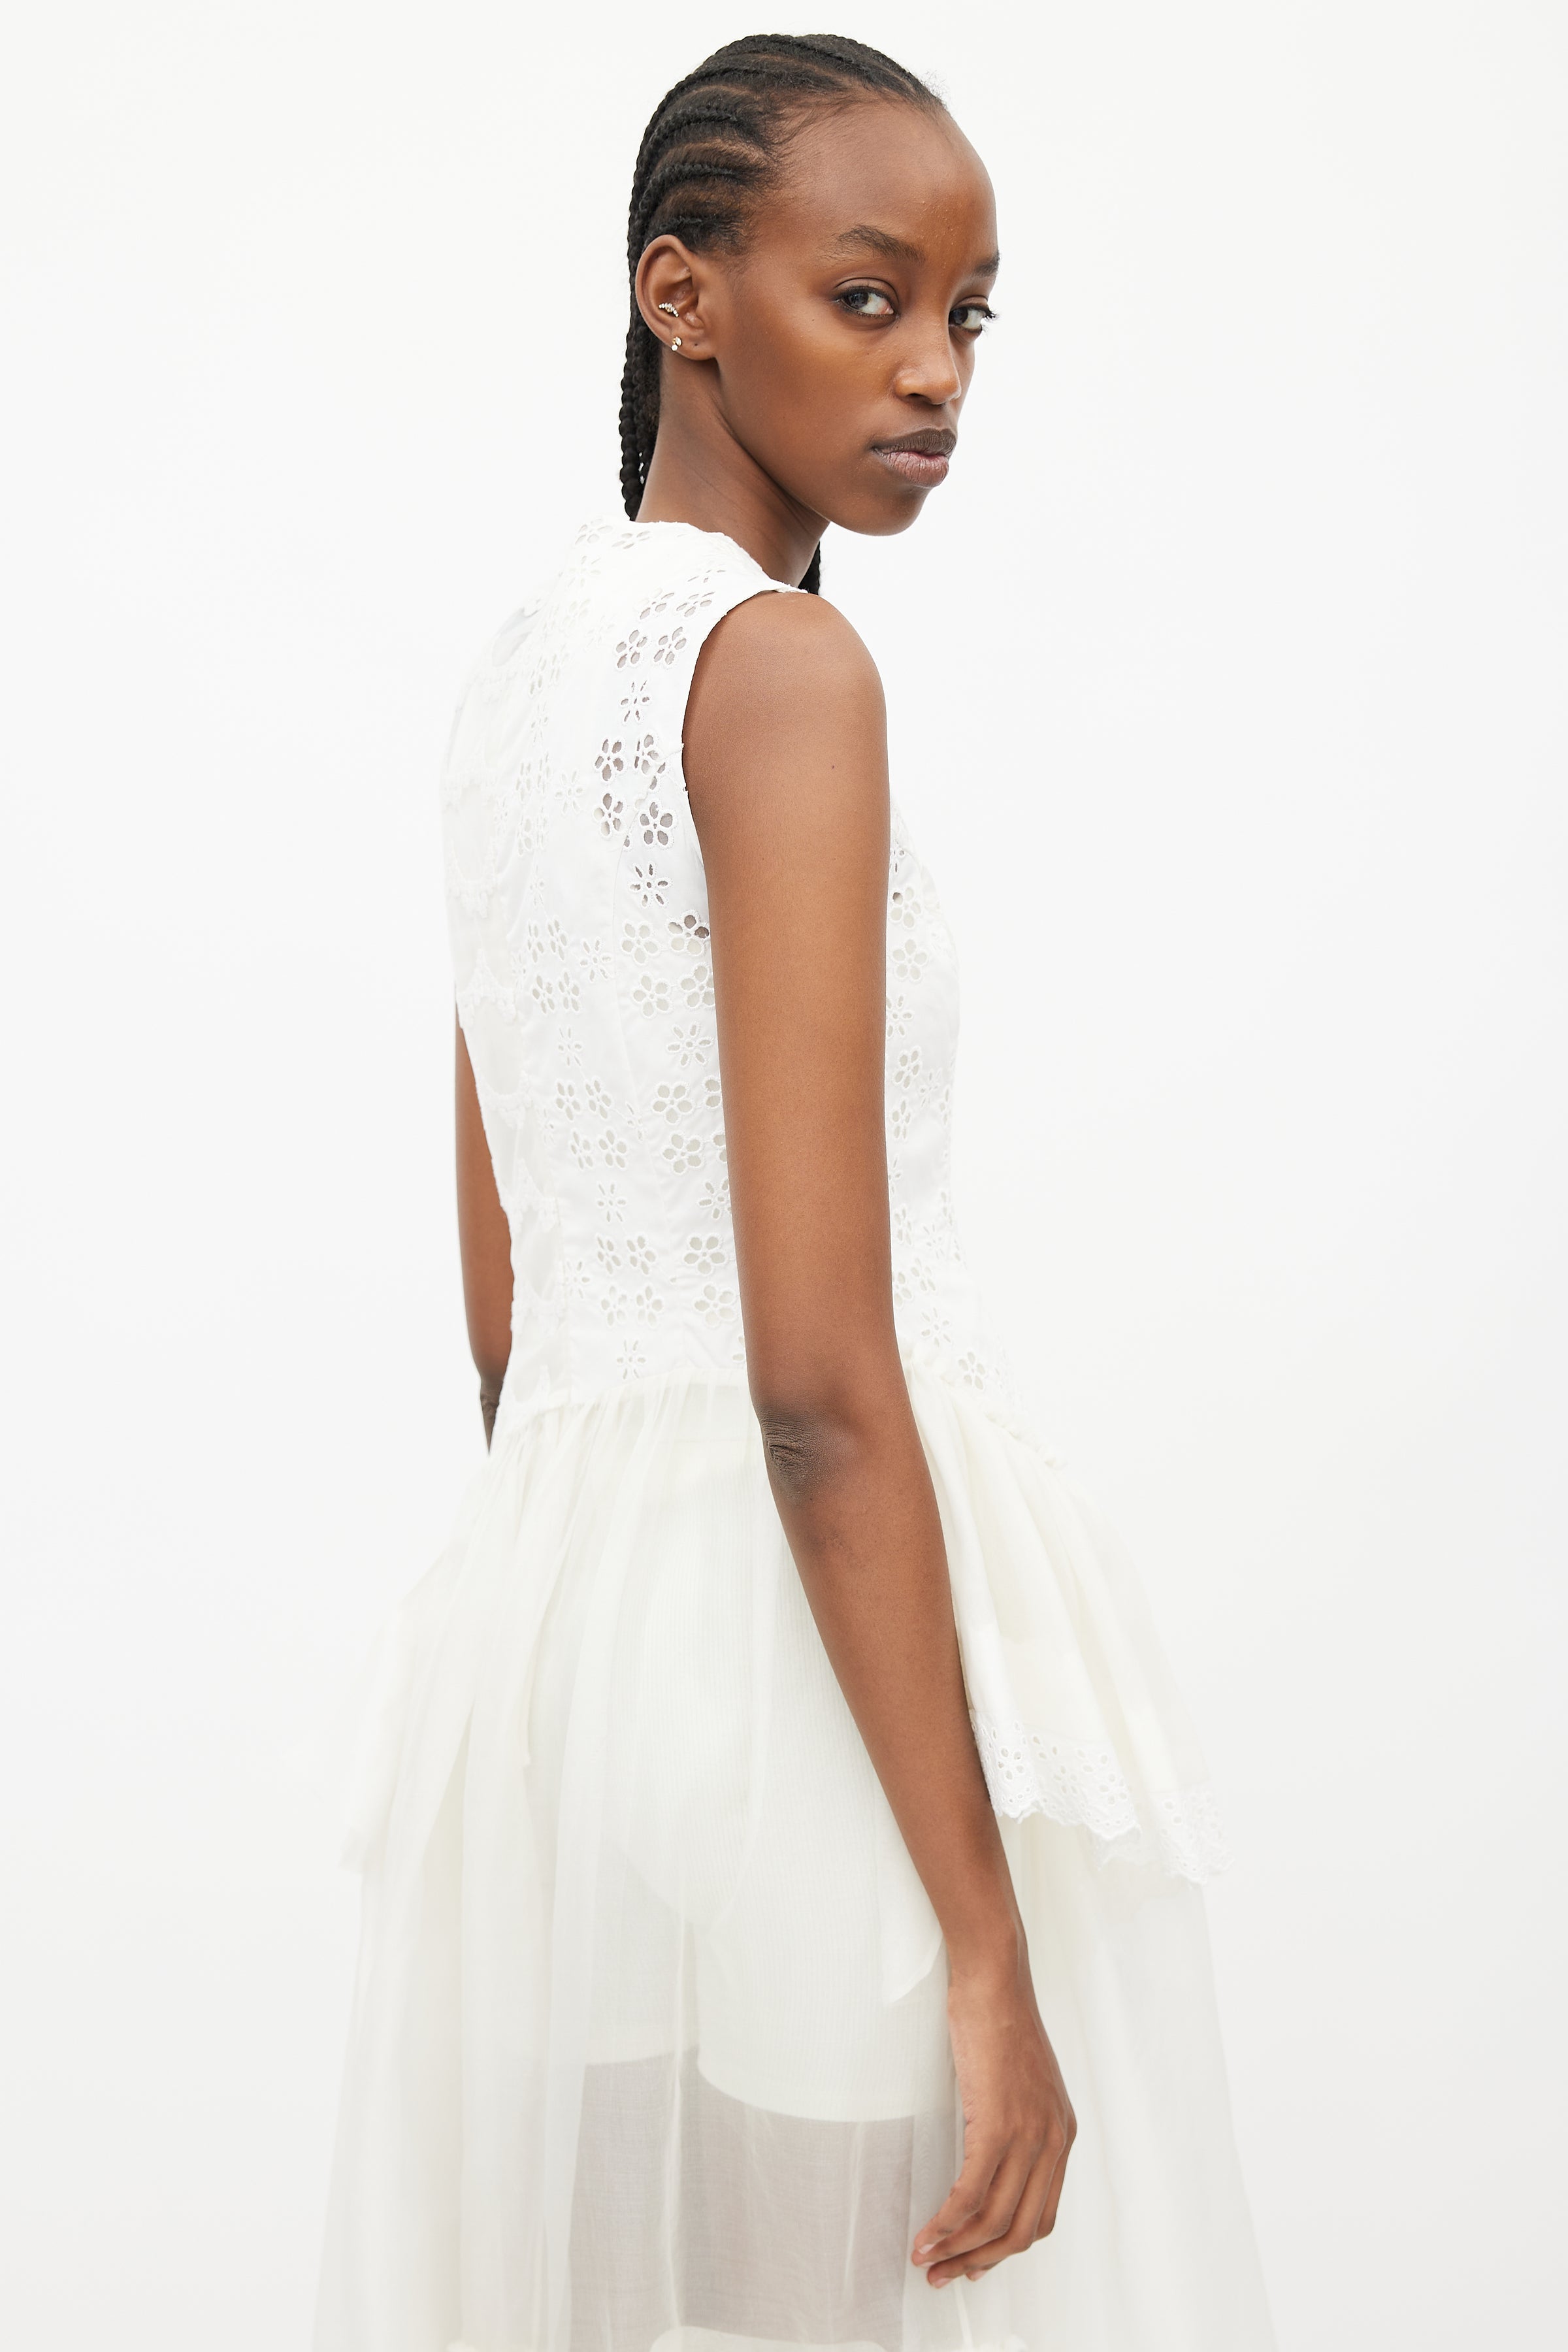 Simone Rocha // Spring 2017 White Lace Sheer Dress – VSP Consignment